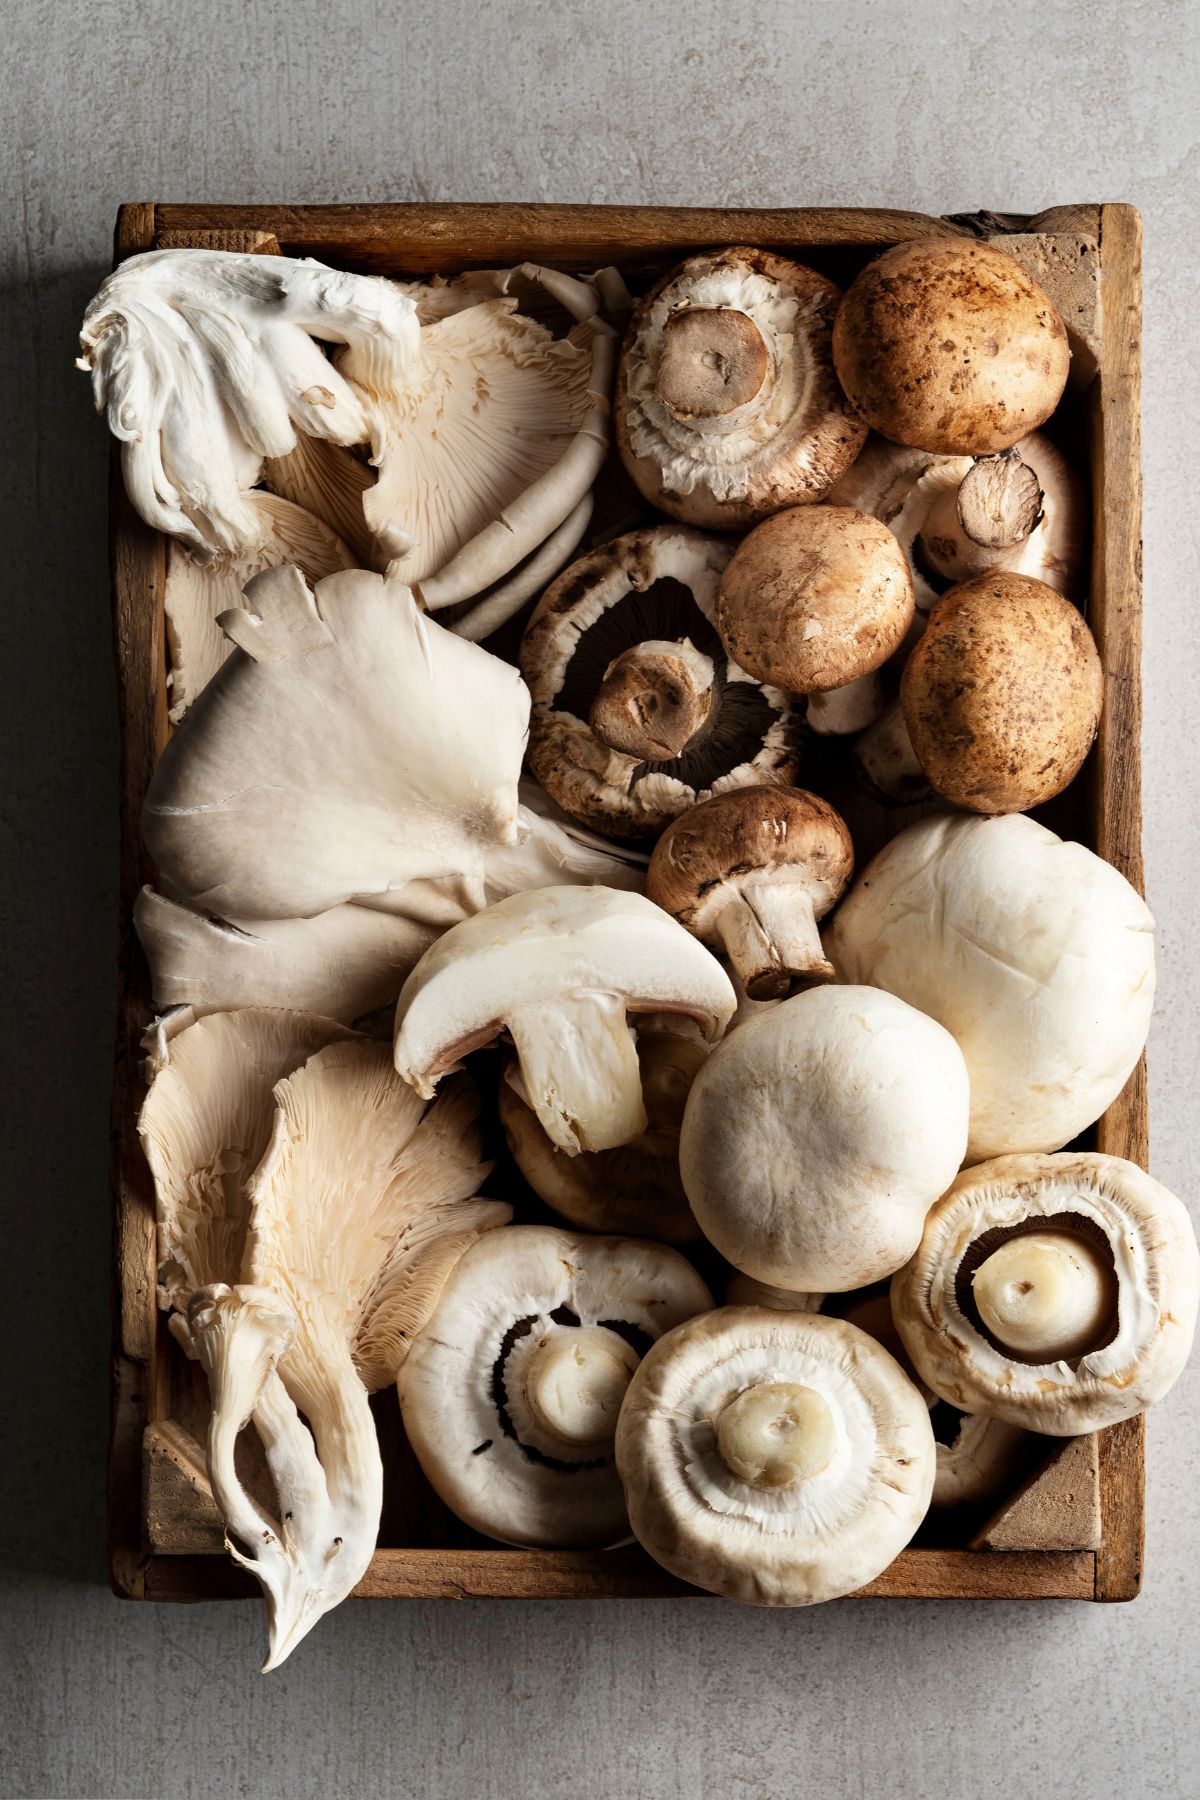 are mushrooms keto friendly